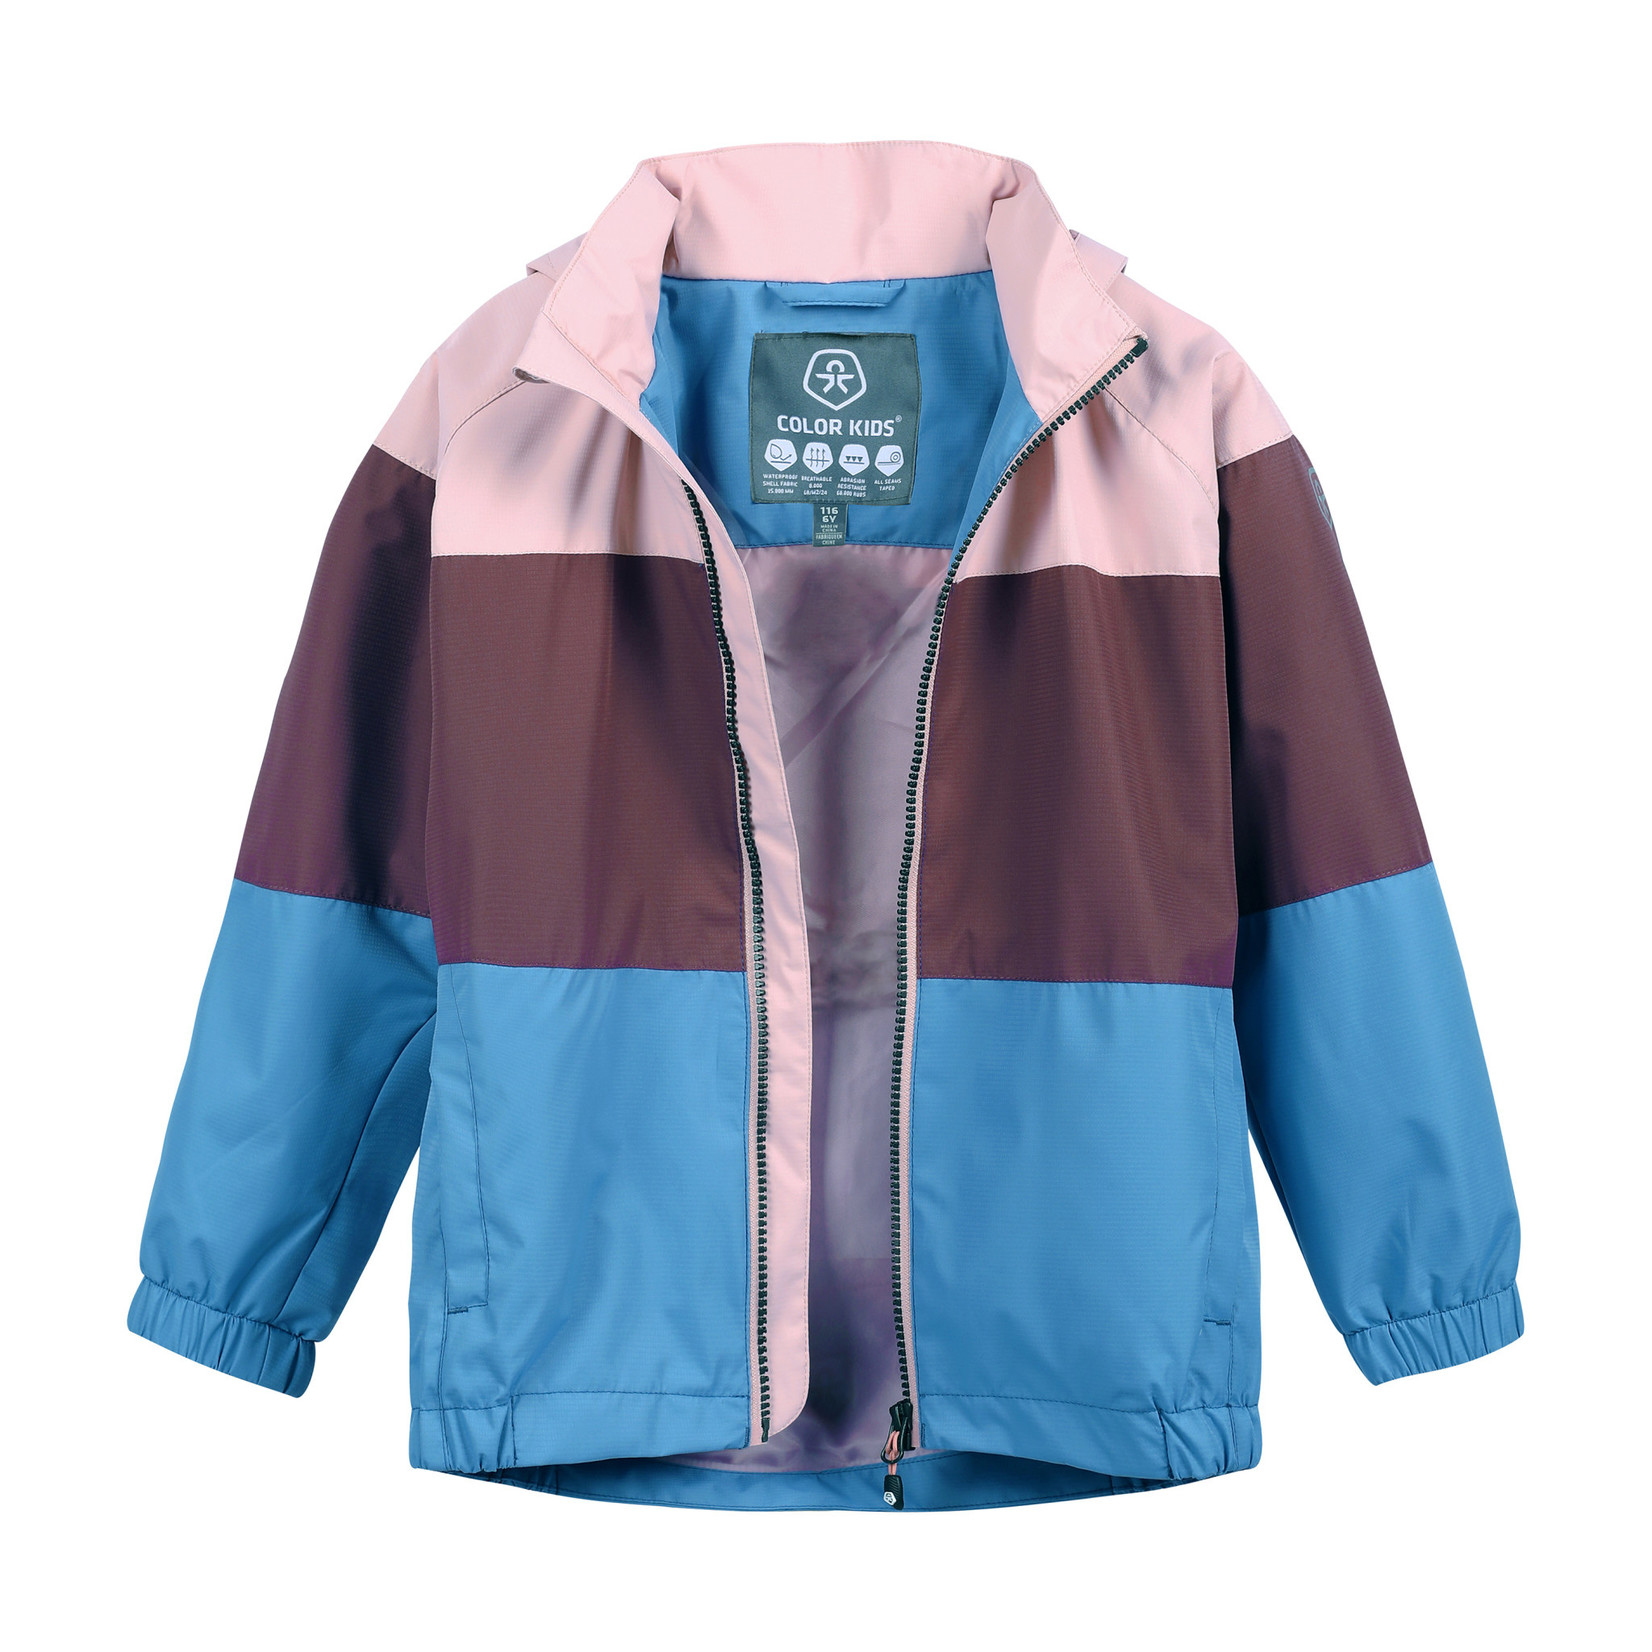 Color Kids COLOR KIDS - Color Block Waterproof Windbreaker Jacket - Pink, Plum et Blue